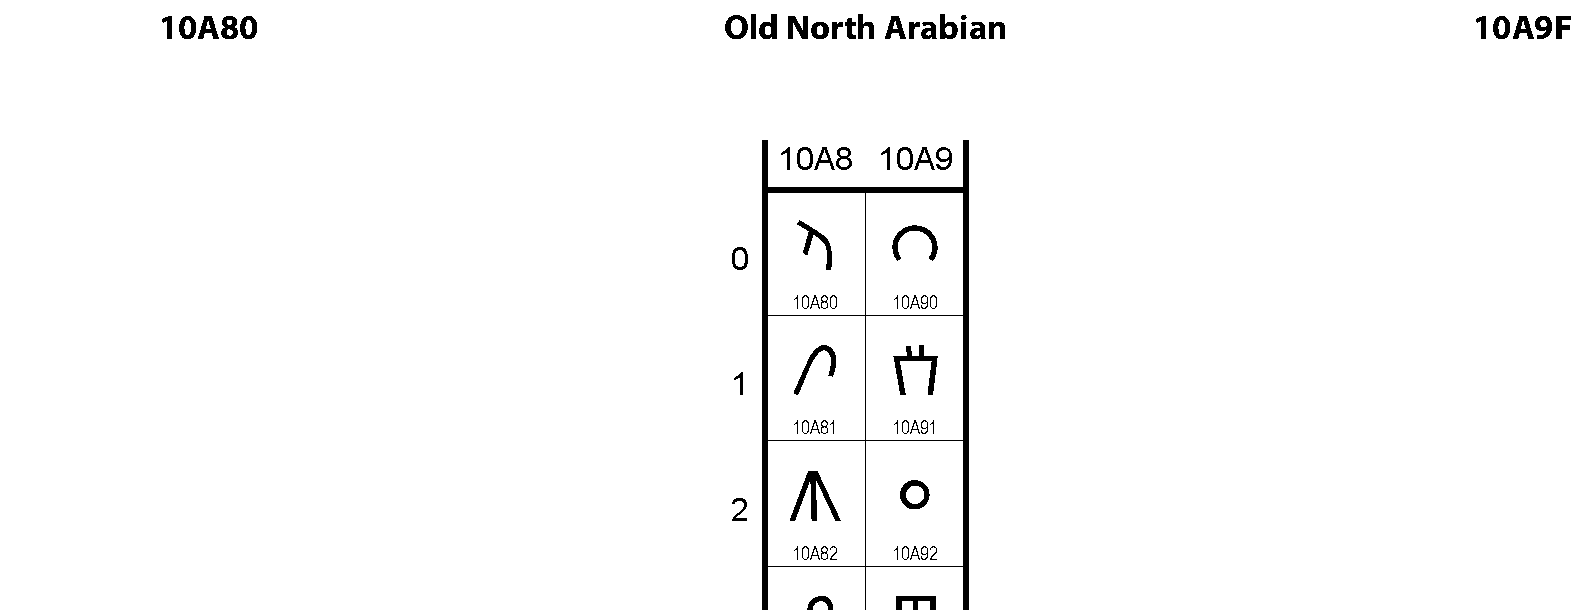 Unicode - Old North Arabian